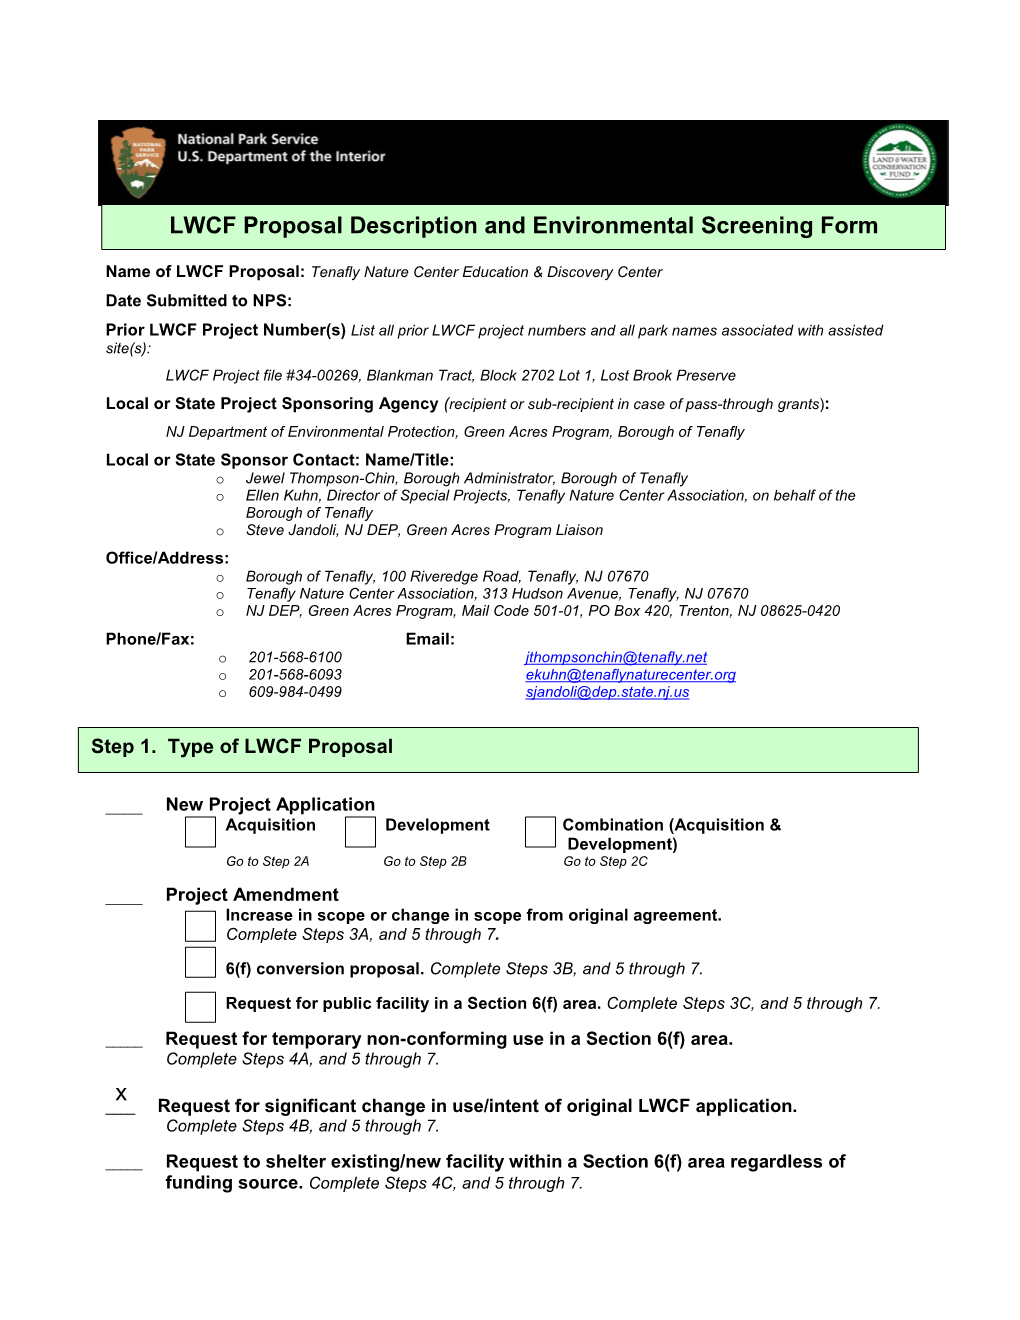 LWCF Proposal Description and Environmental Screening Form X